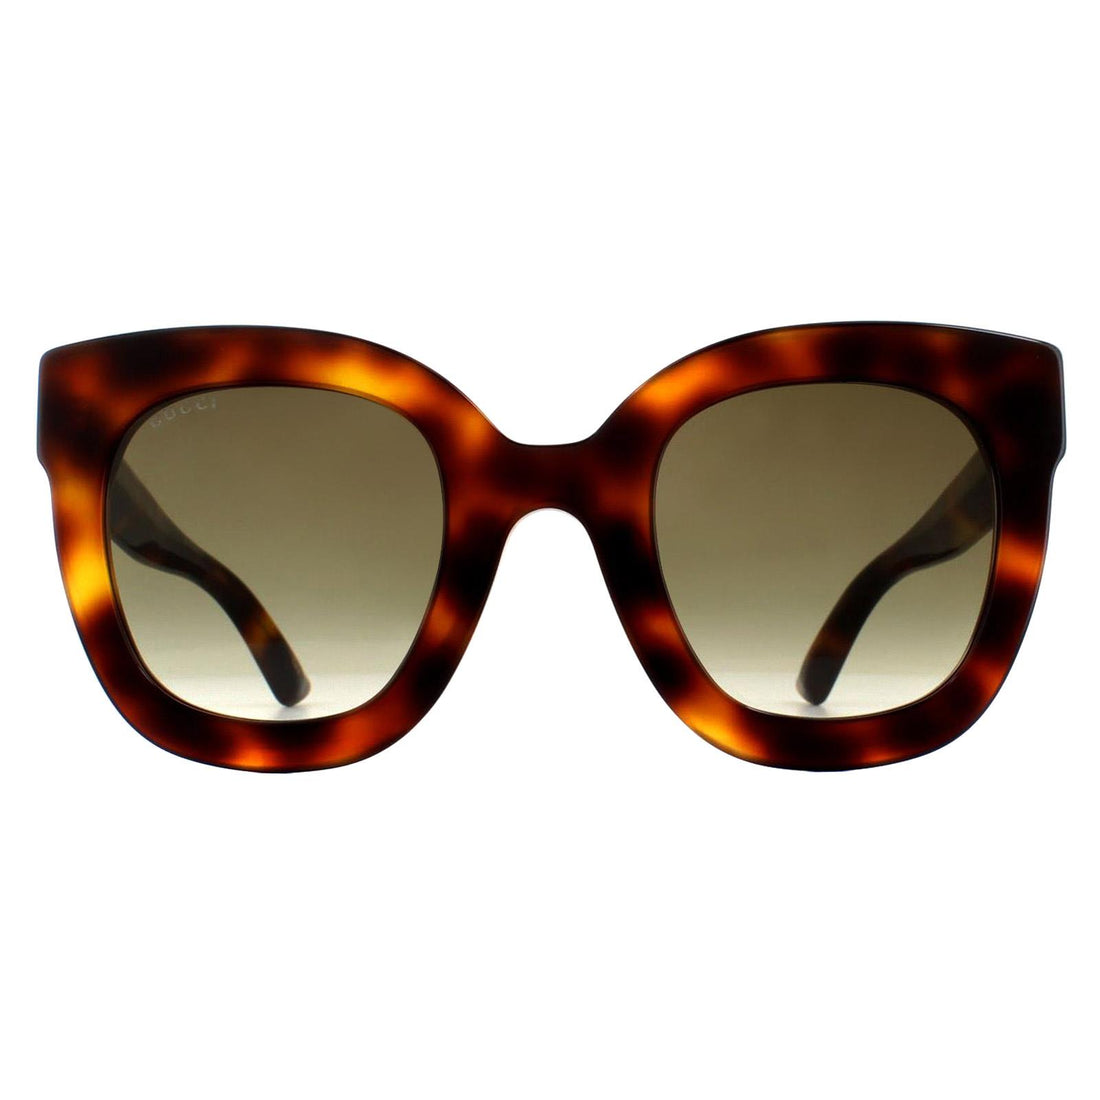 Gucci GG0208S Sunglasses Havana Brown Gradient